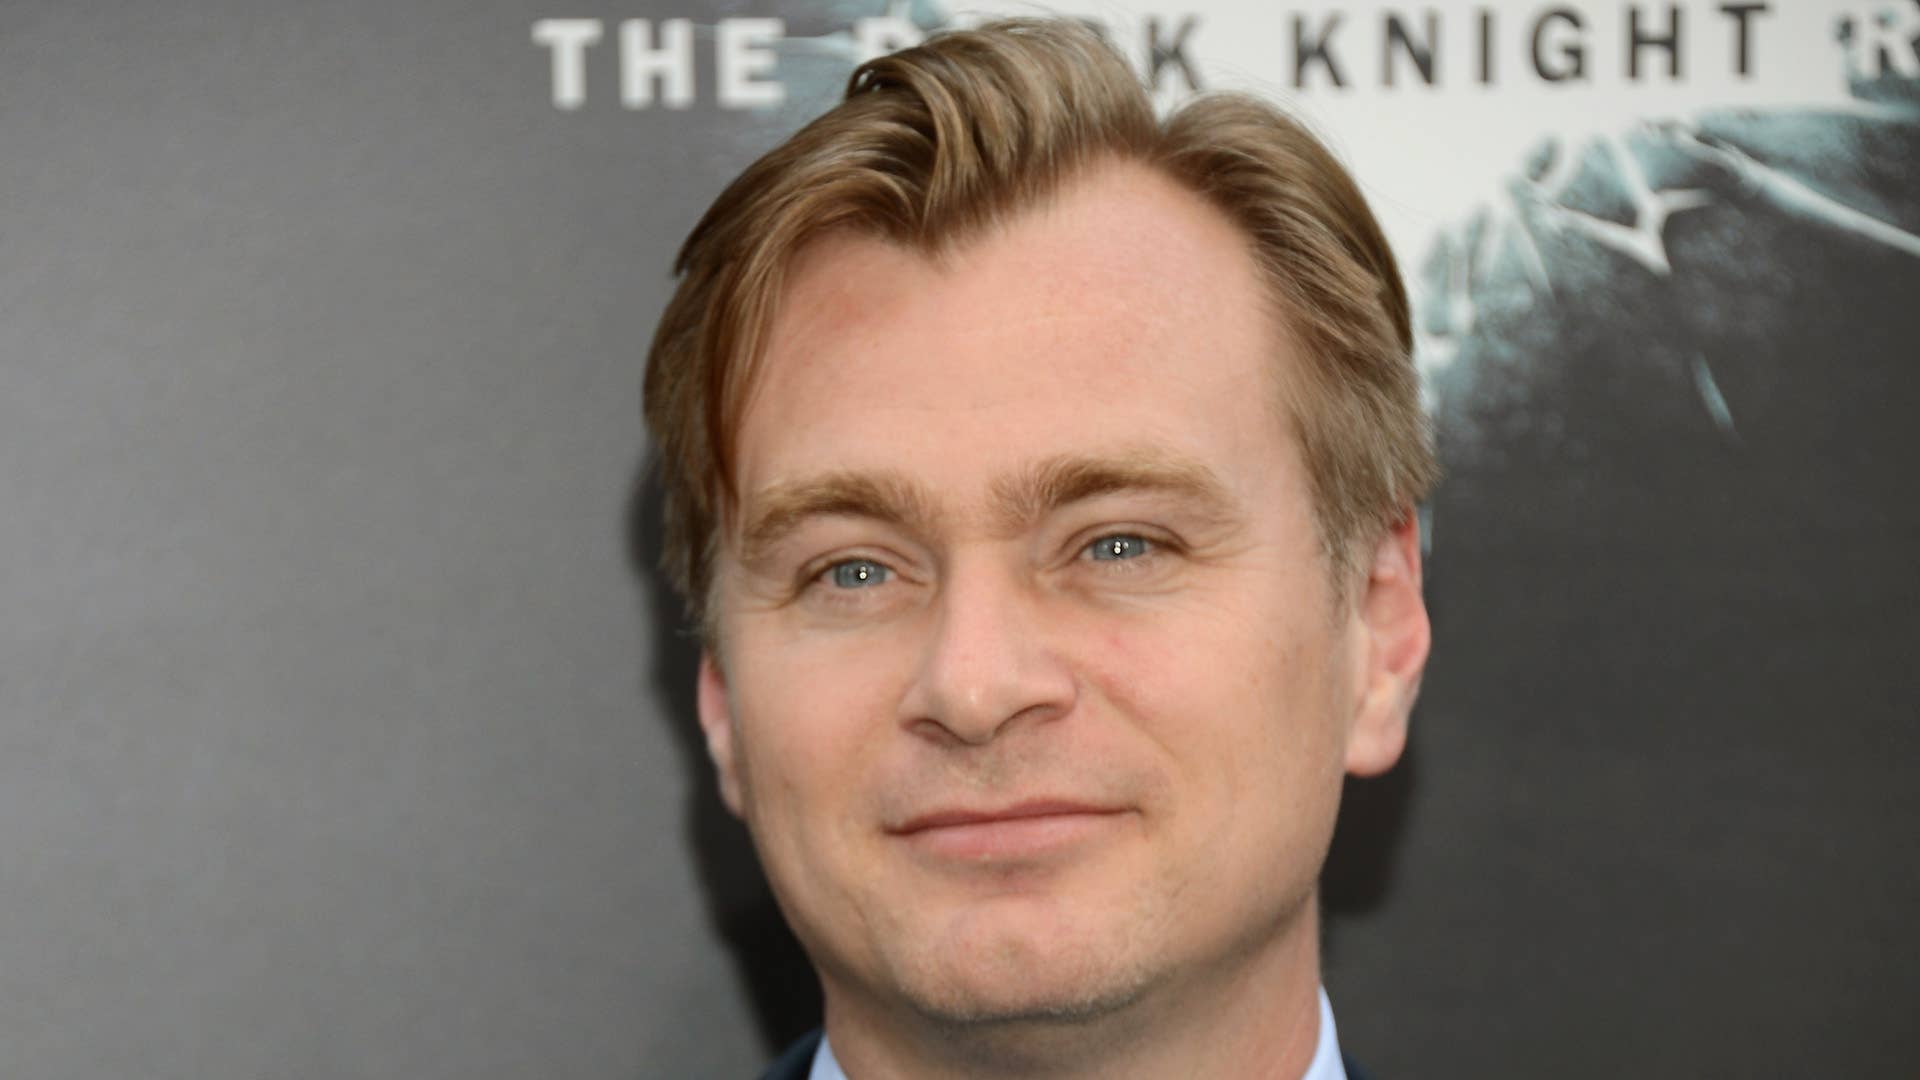 Christopher Nolan attends "The Dark Knight Rises" premiere.